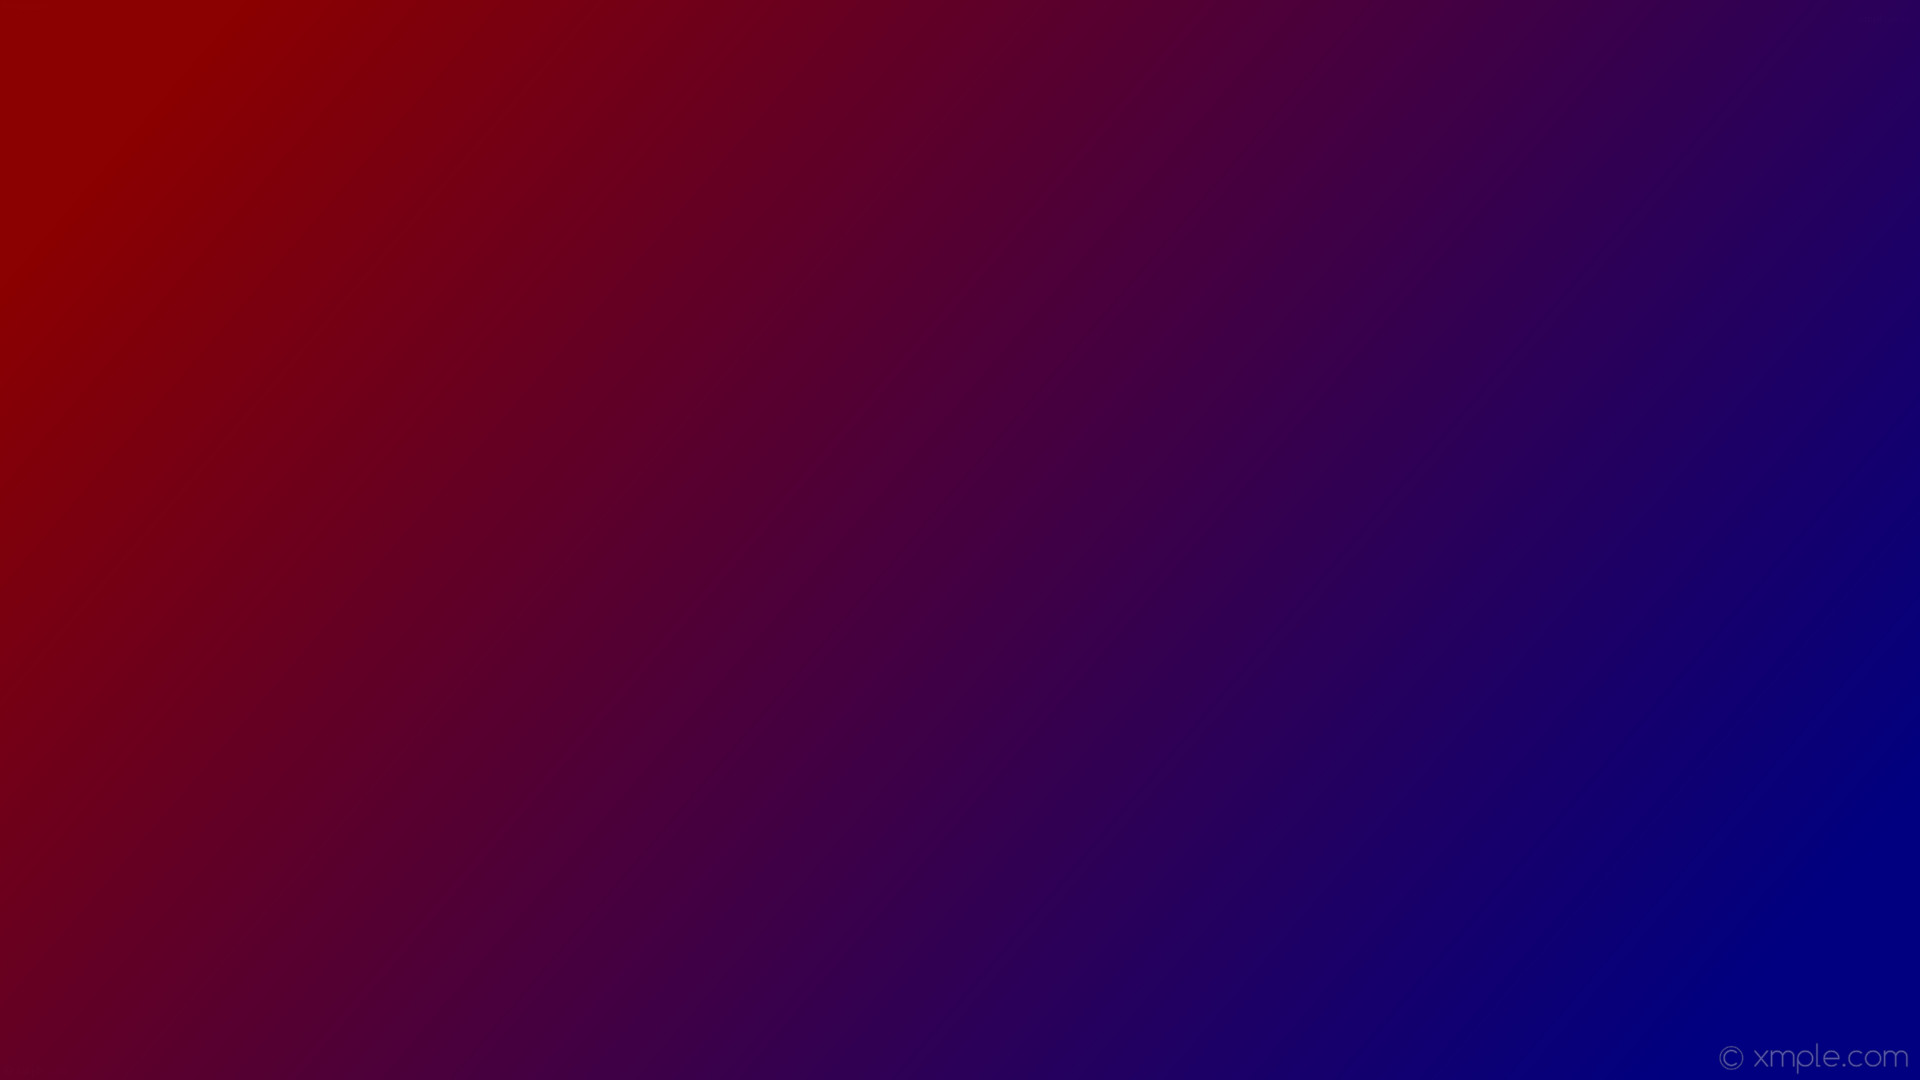 wallpaper gradient linear red blue dark red navy #8b0000 #000080 165Â°